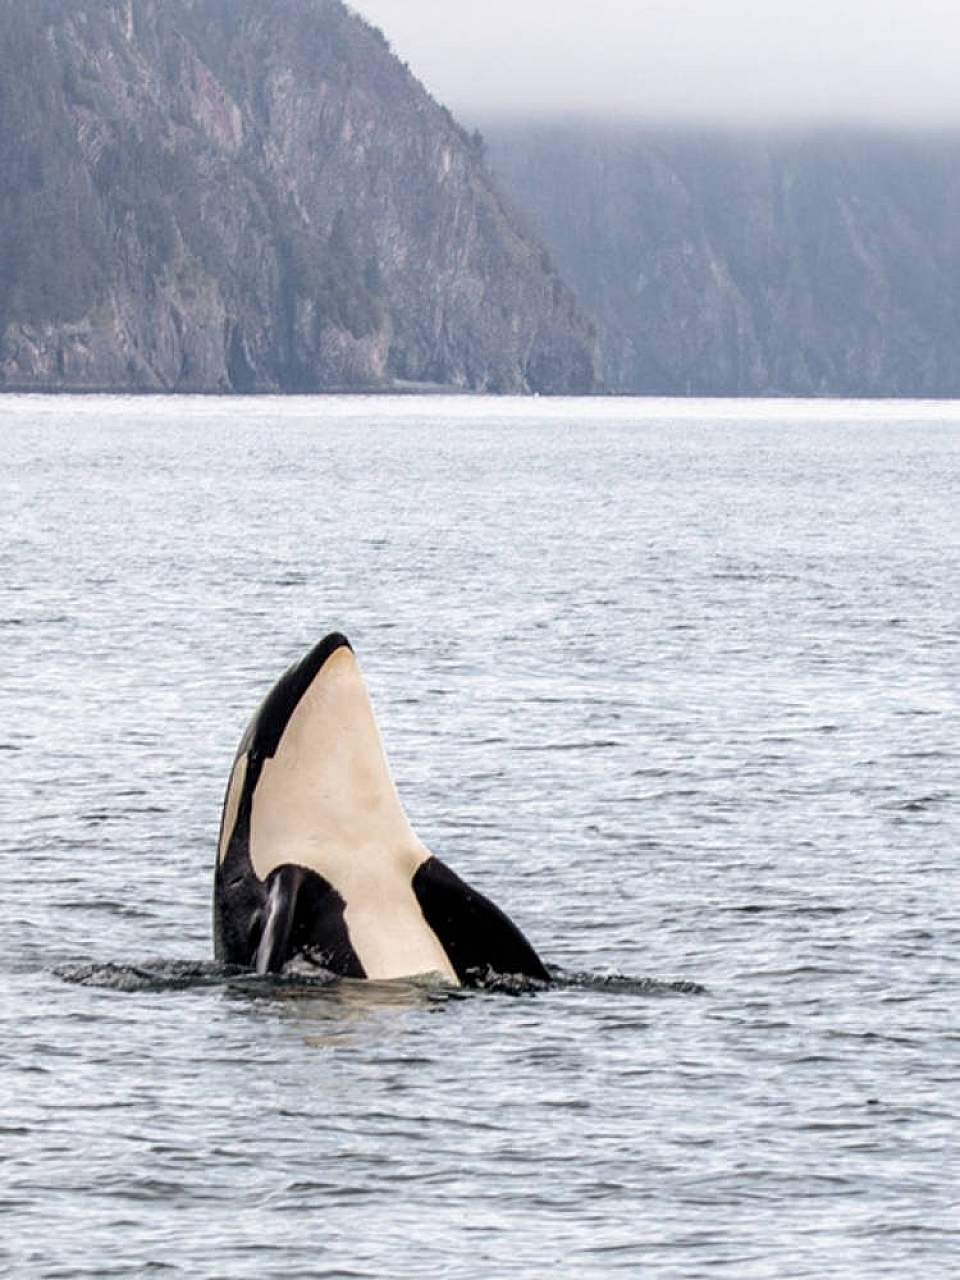 Orca Whale breaching in seward Alaska